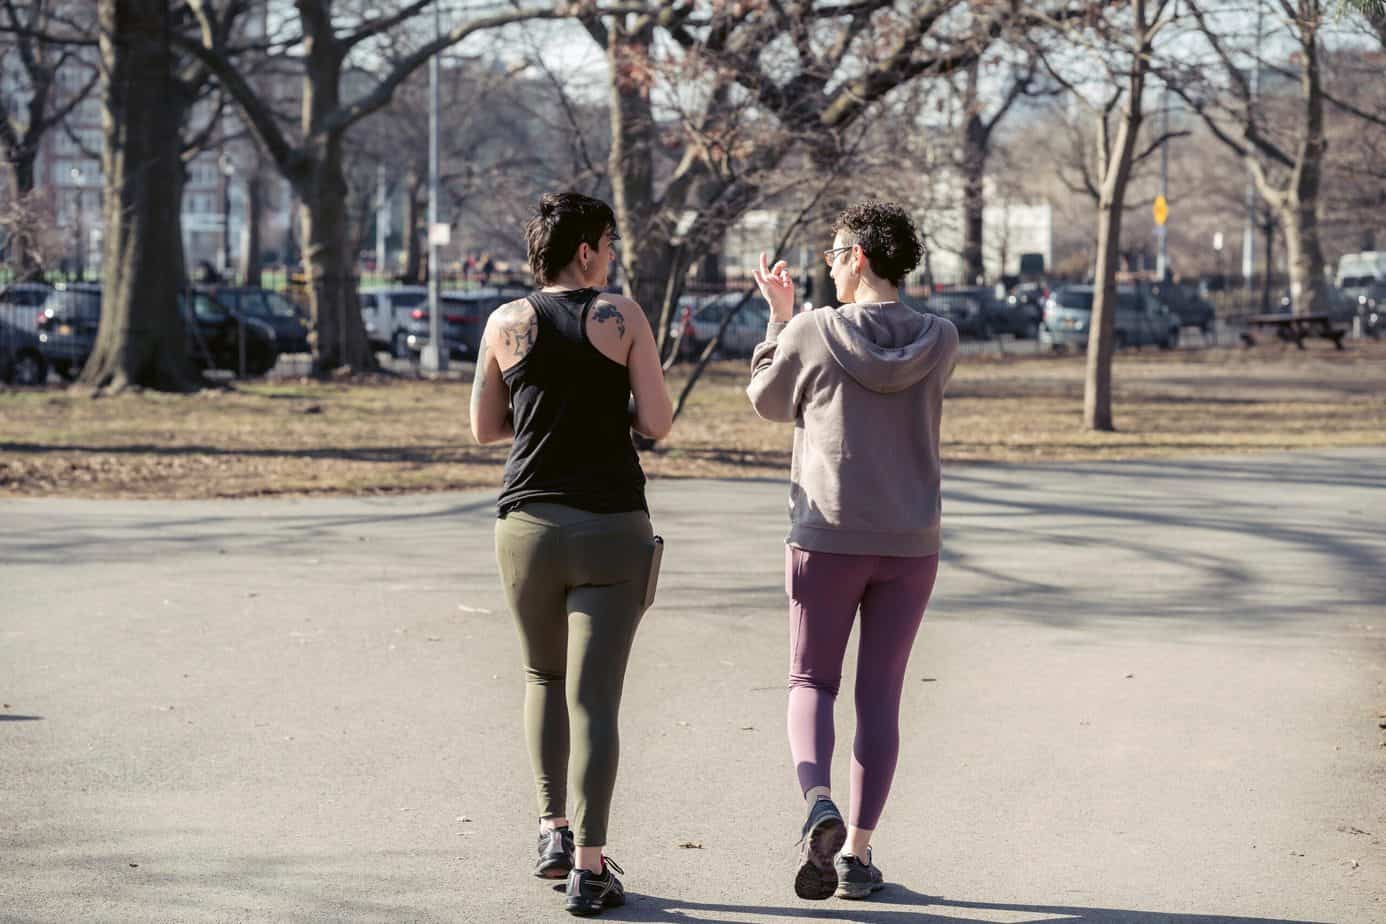 Two people walking wearing leggings